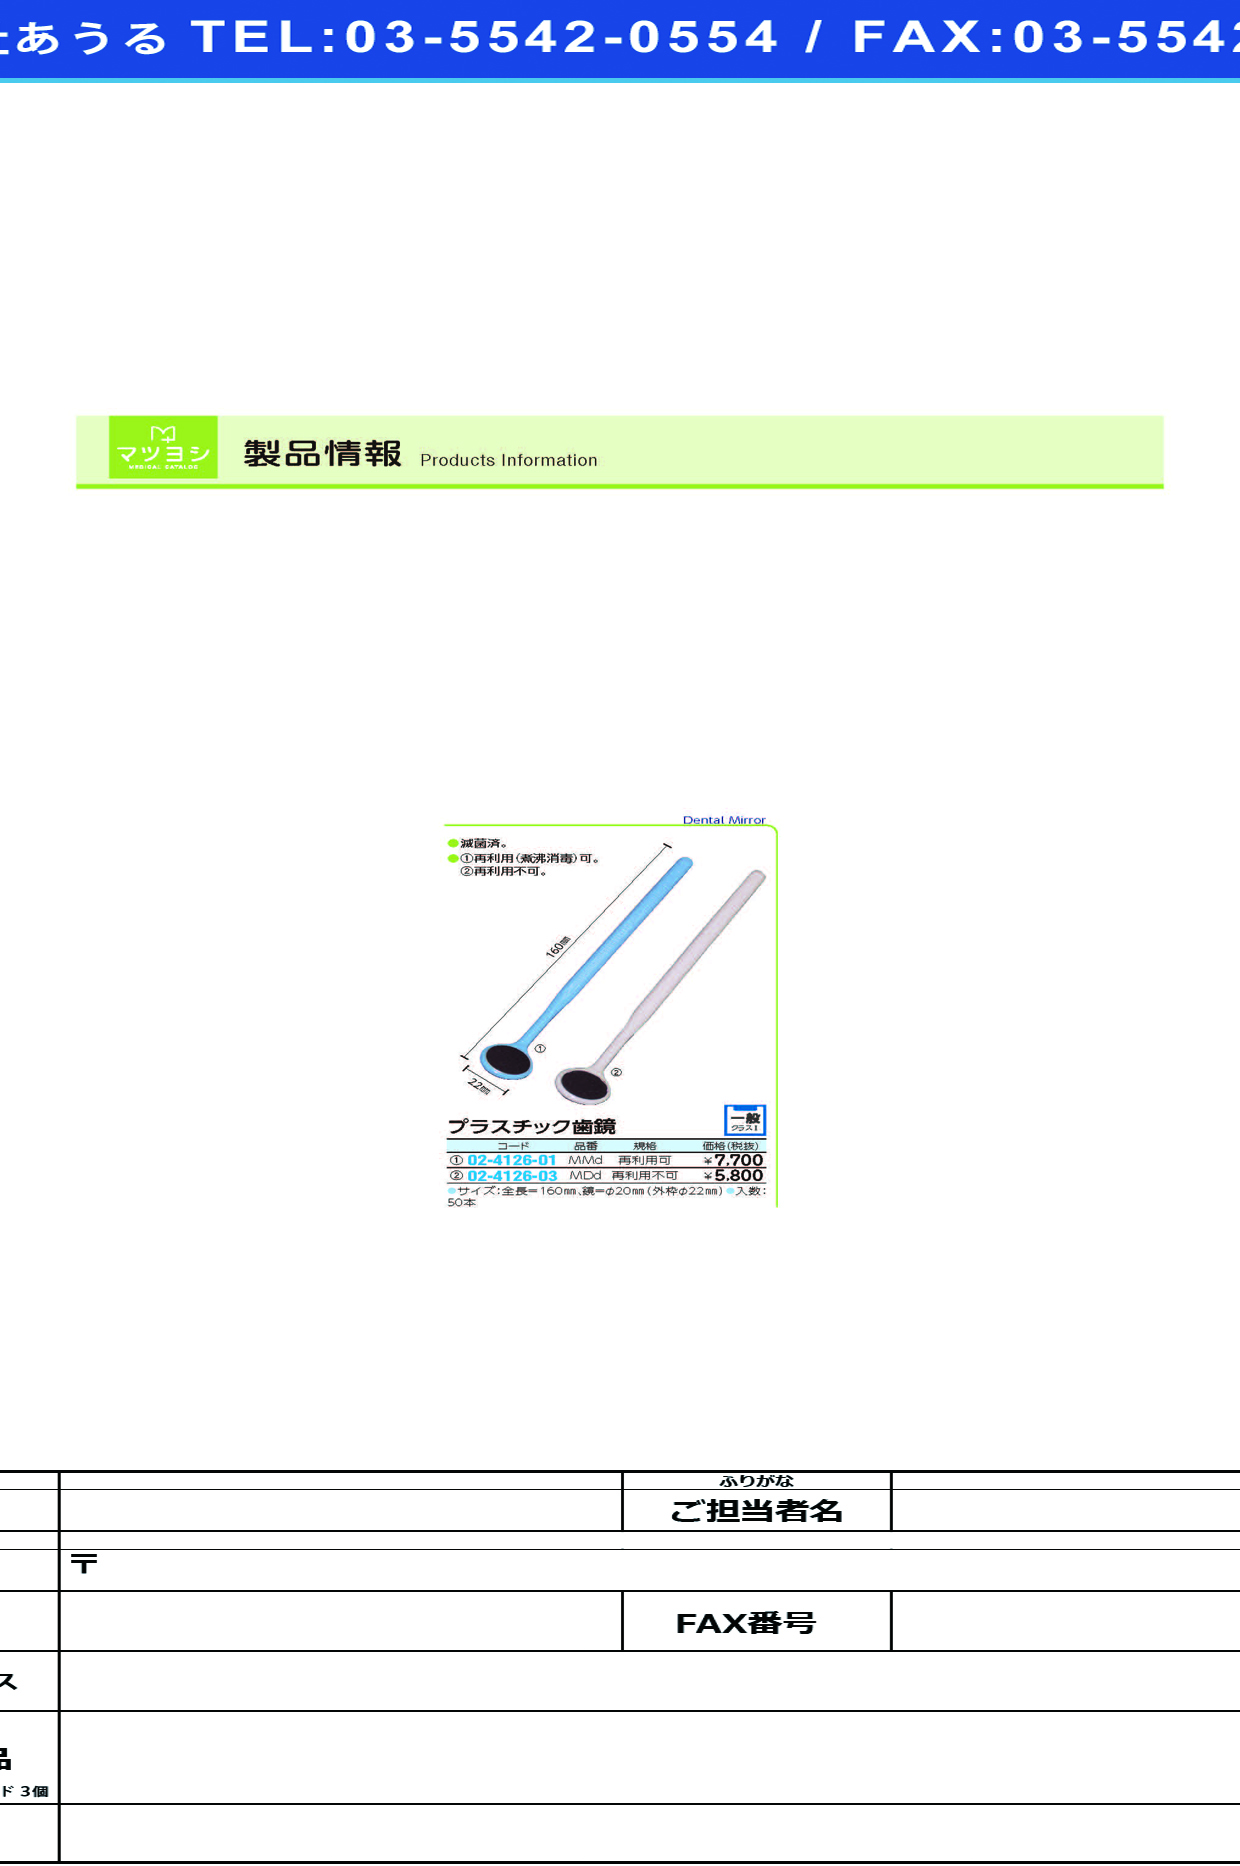 (02-4126-01)ディスポ歯鏡（ＭＭｄ）青色 50ﾎﾟﾝｲﾘ(10ﾎﾟﾝX5ﾌｸﾛ) ﾃﾞｨｽﾎﾟｼｷｮｳ(MMD)ｱｵｲﾛ【1箱単位】【2019年カタログ商品】